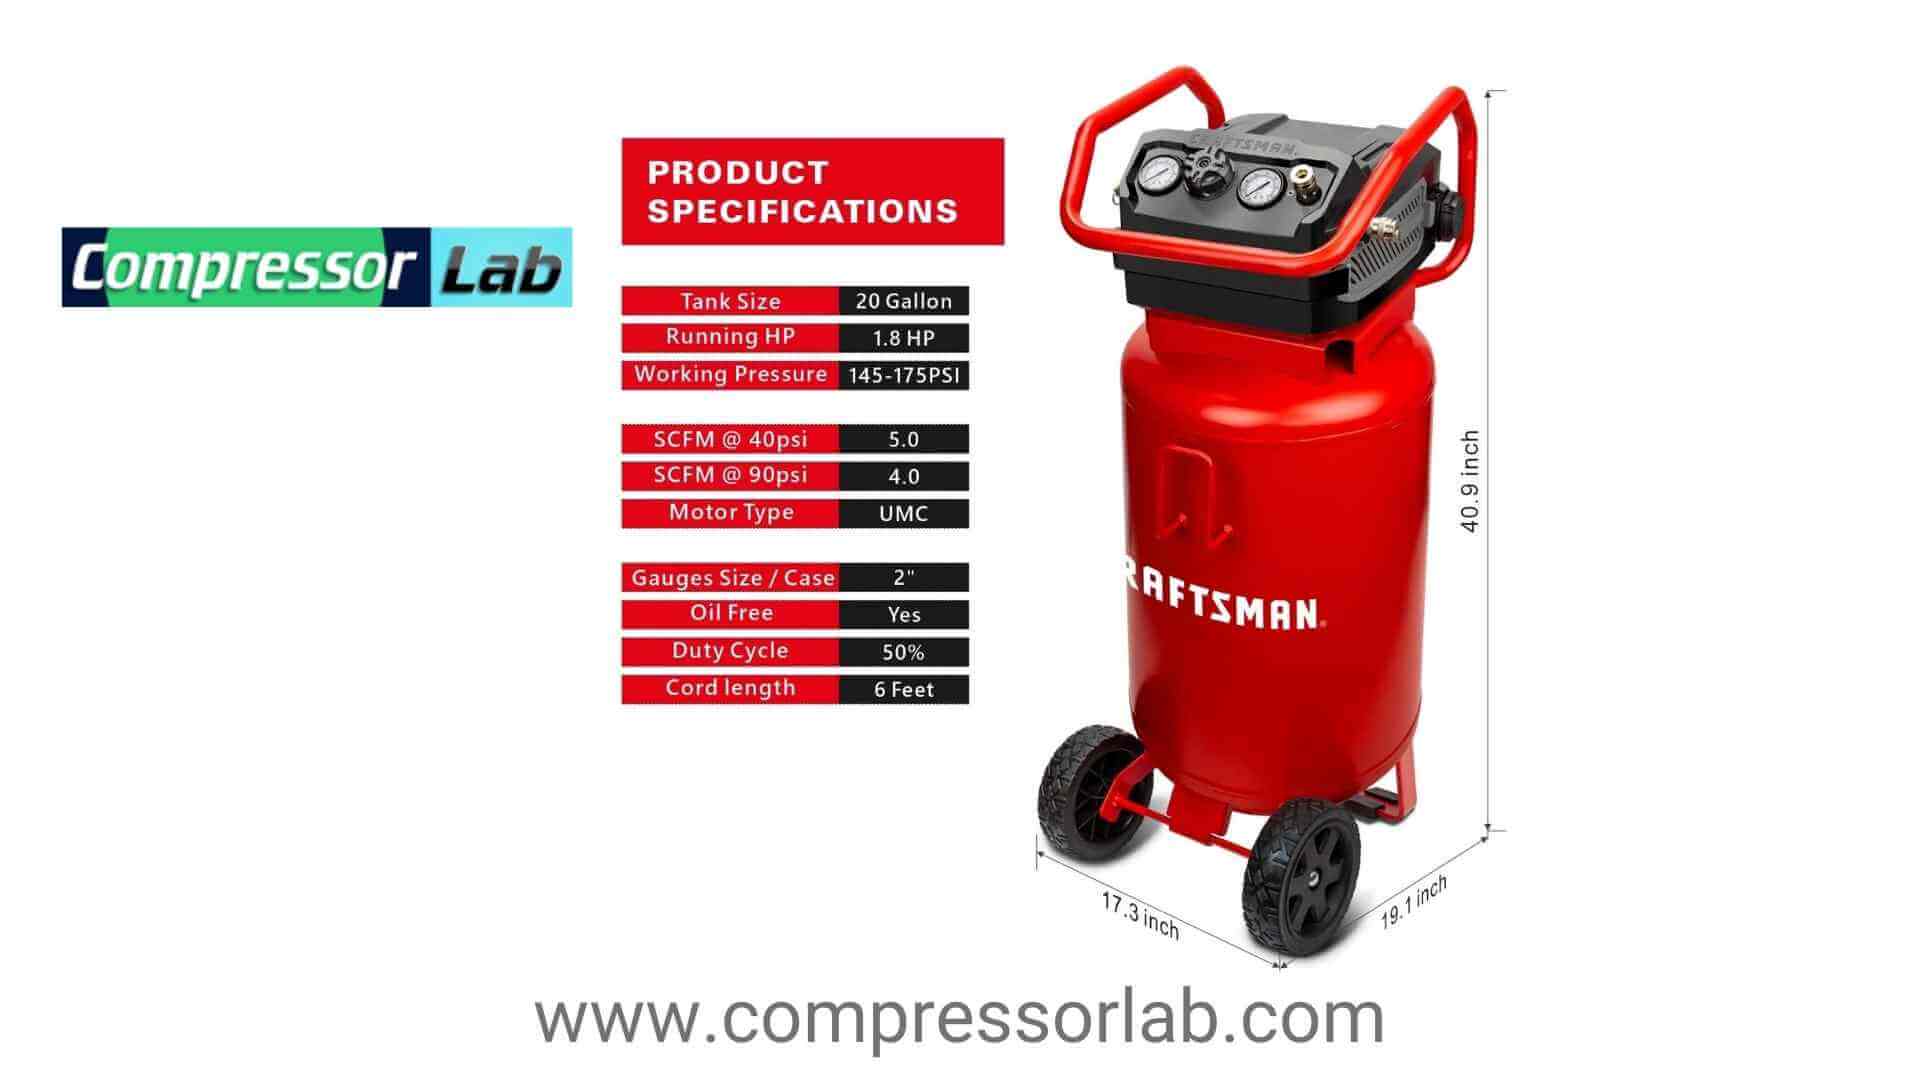 Craftsman 20 Gallon Air Compressor